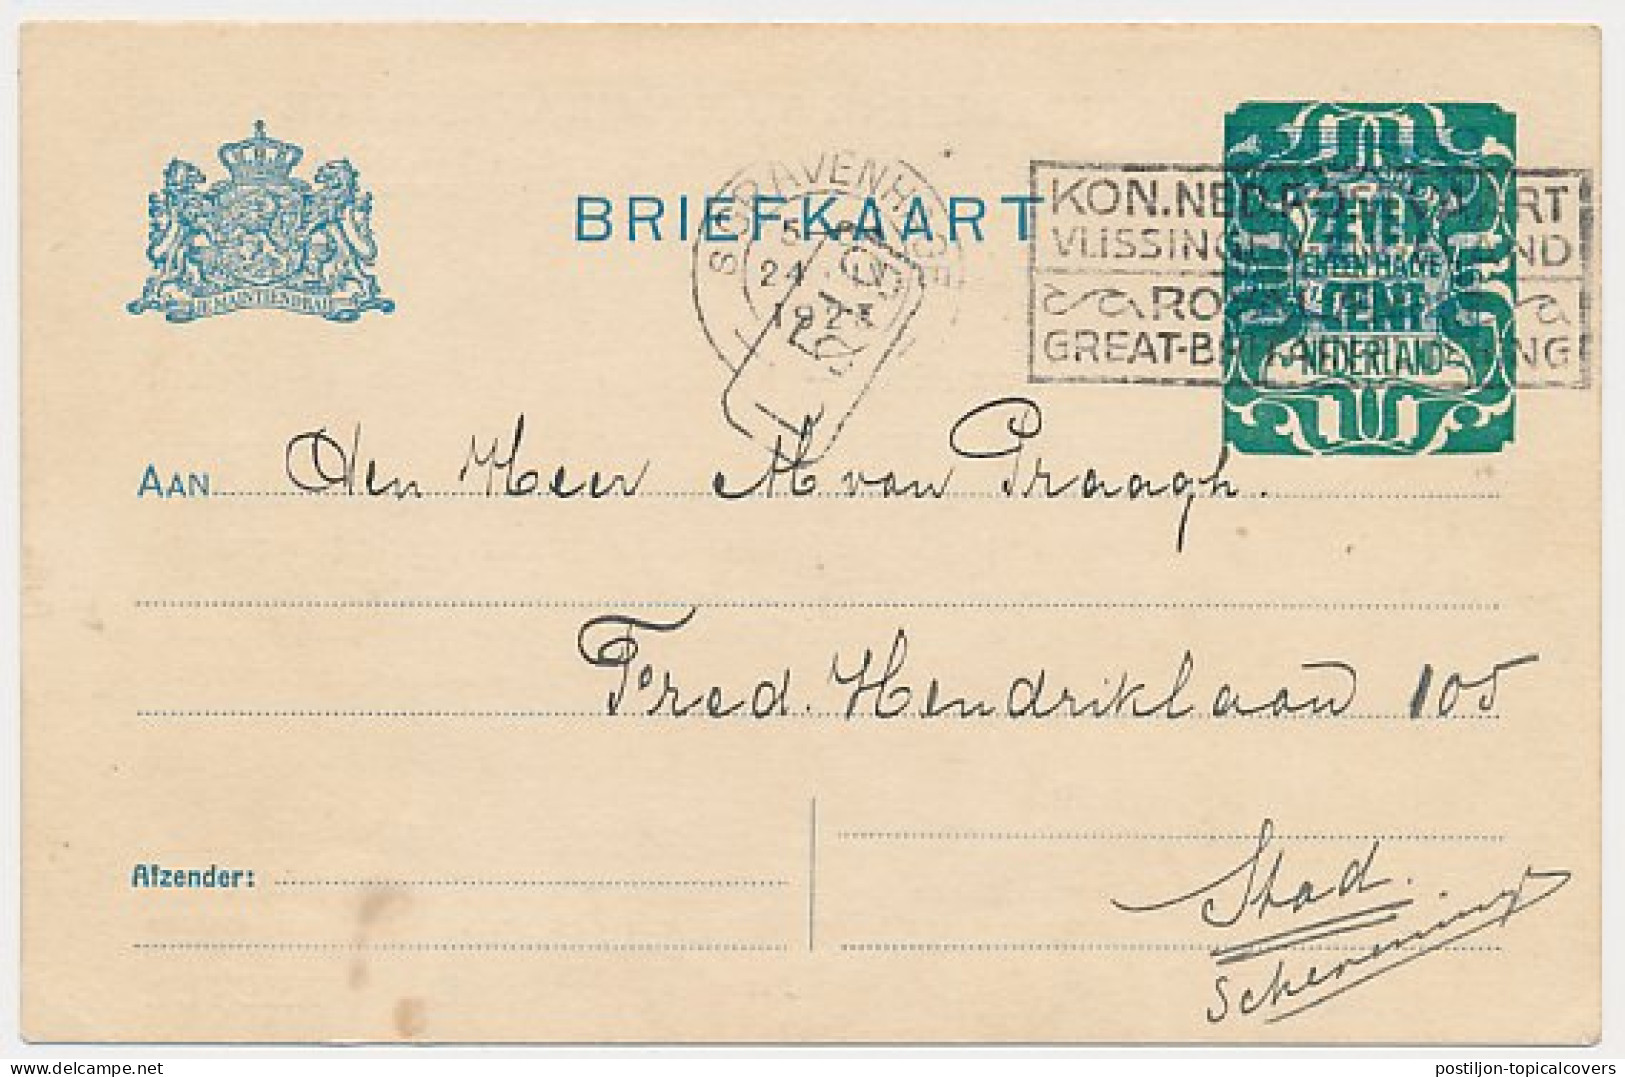 Briefkaart G. DW163-II-b - Duinwaterleiding S-Gravenhage 1923 - Postwaardestukken